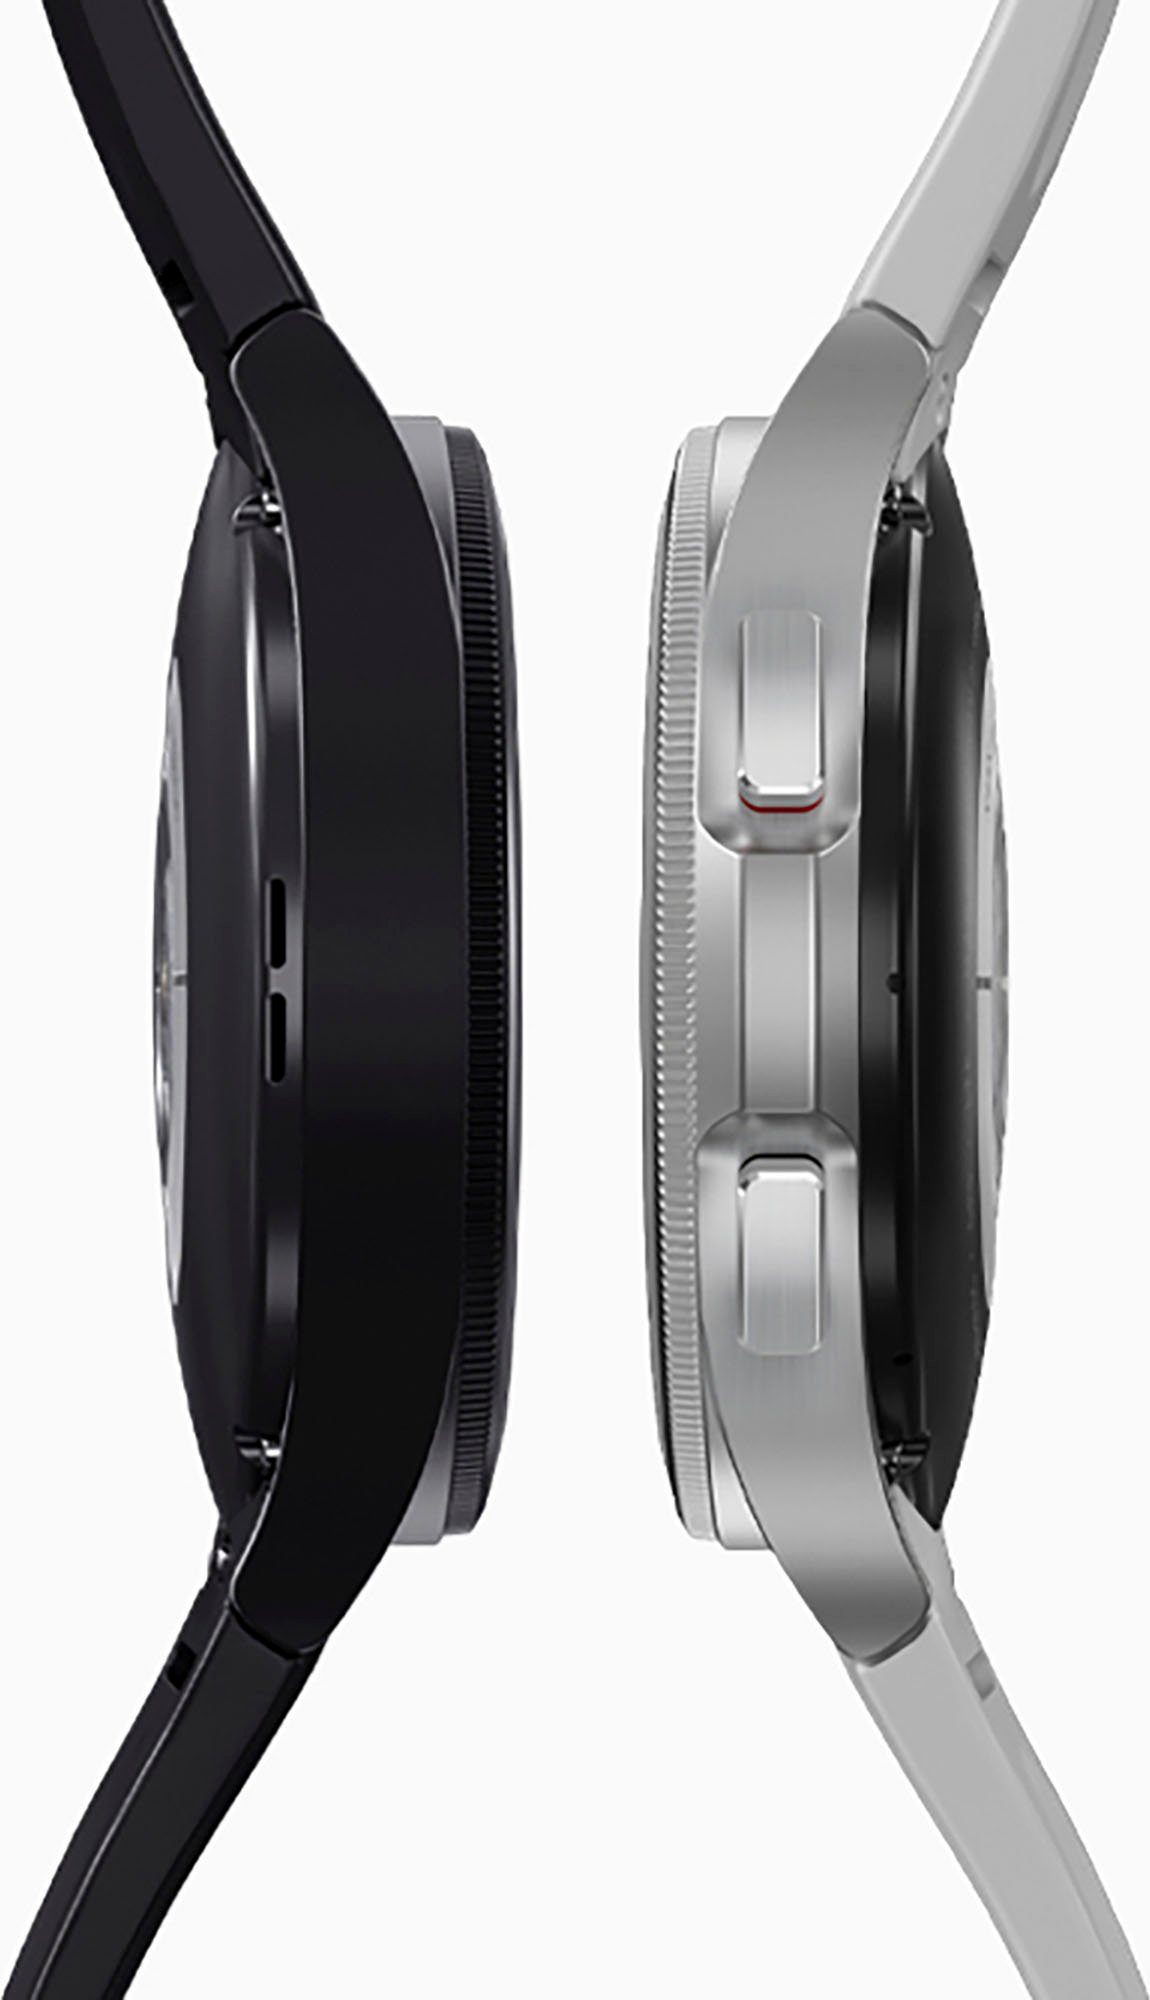 Samsung Galaxy Watch (3,46 Gesundheitsfunktionen silberfarben by Fitness Tracker, silberfarben | Fitness OS cm/1,4 Uhr, Smartwatch Wear classic 4 Zoll, 46mm LTE Google)